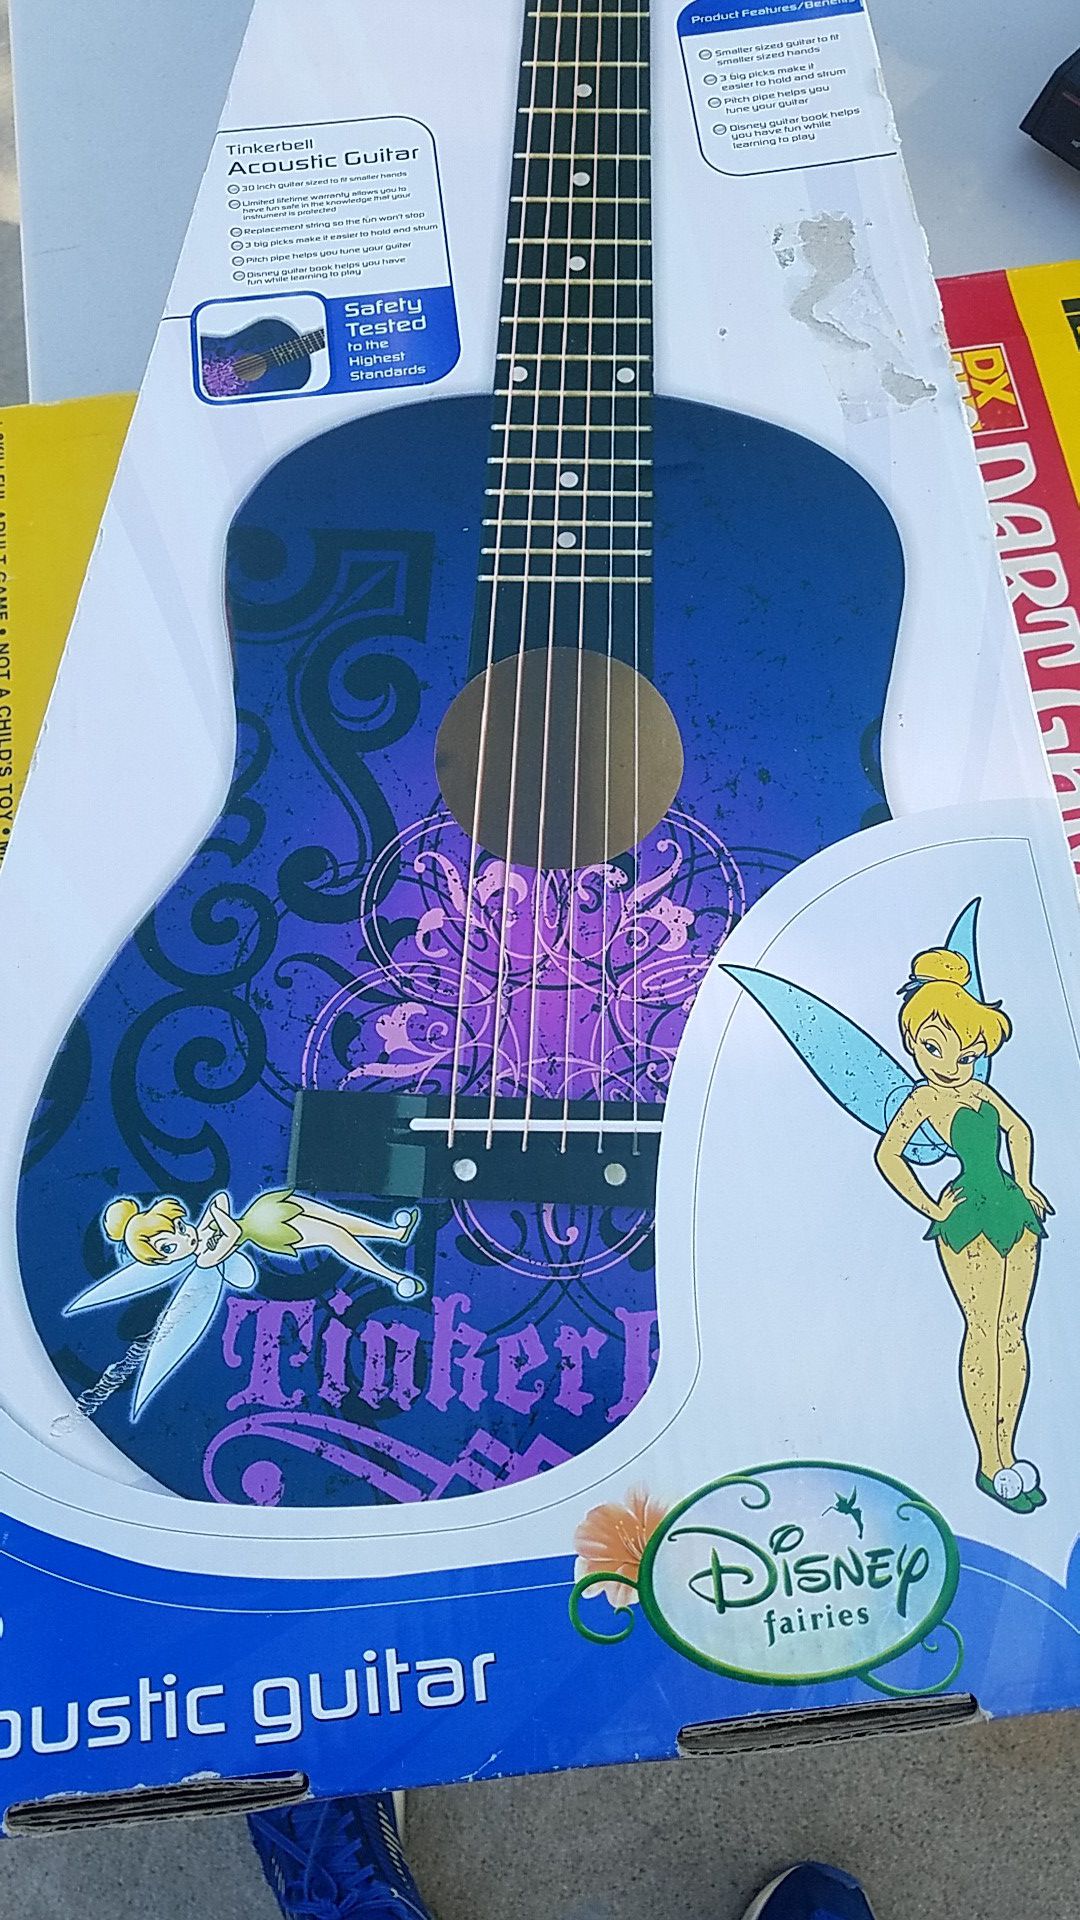 Disney Tinkerbell Wasburn acoustic guitar in box.